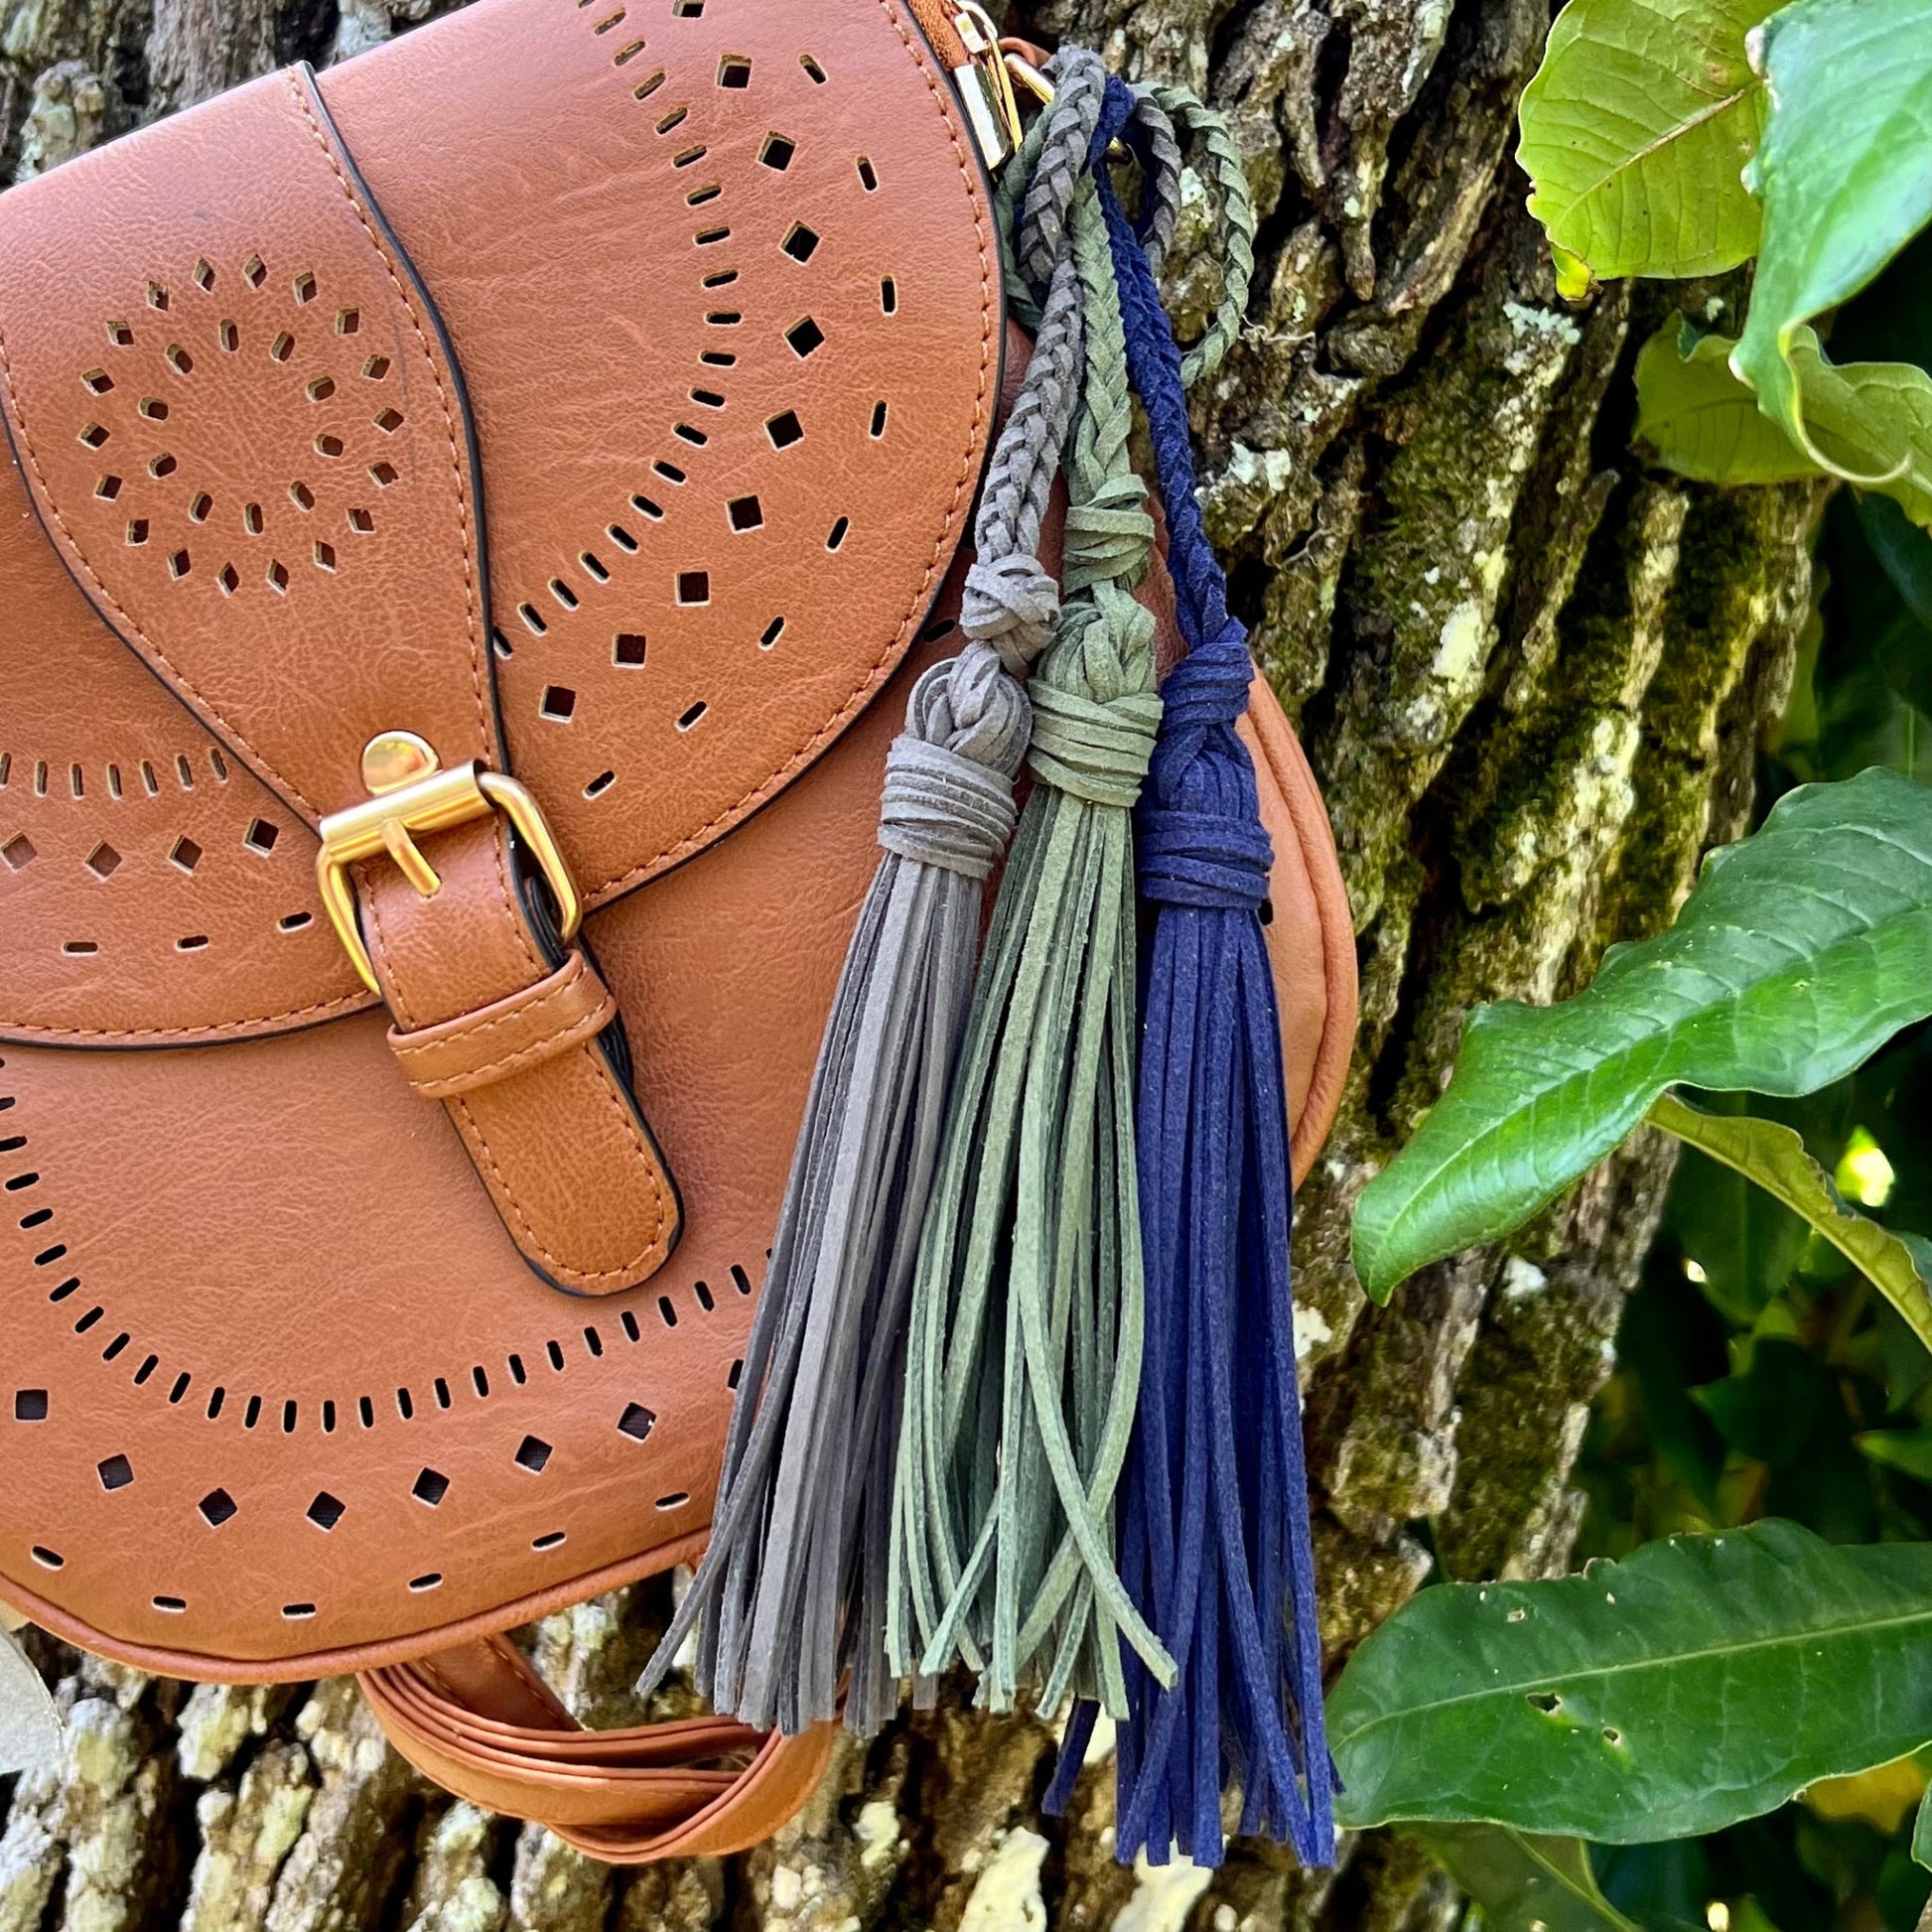 Handmade Bag Charms - Braided with tassels